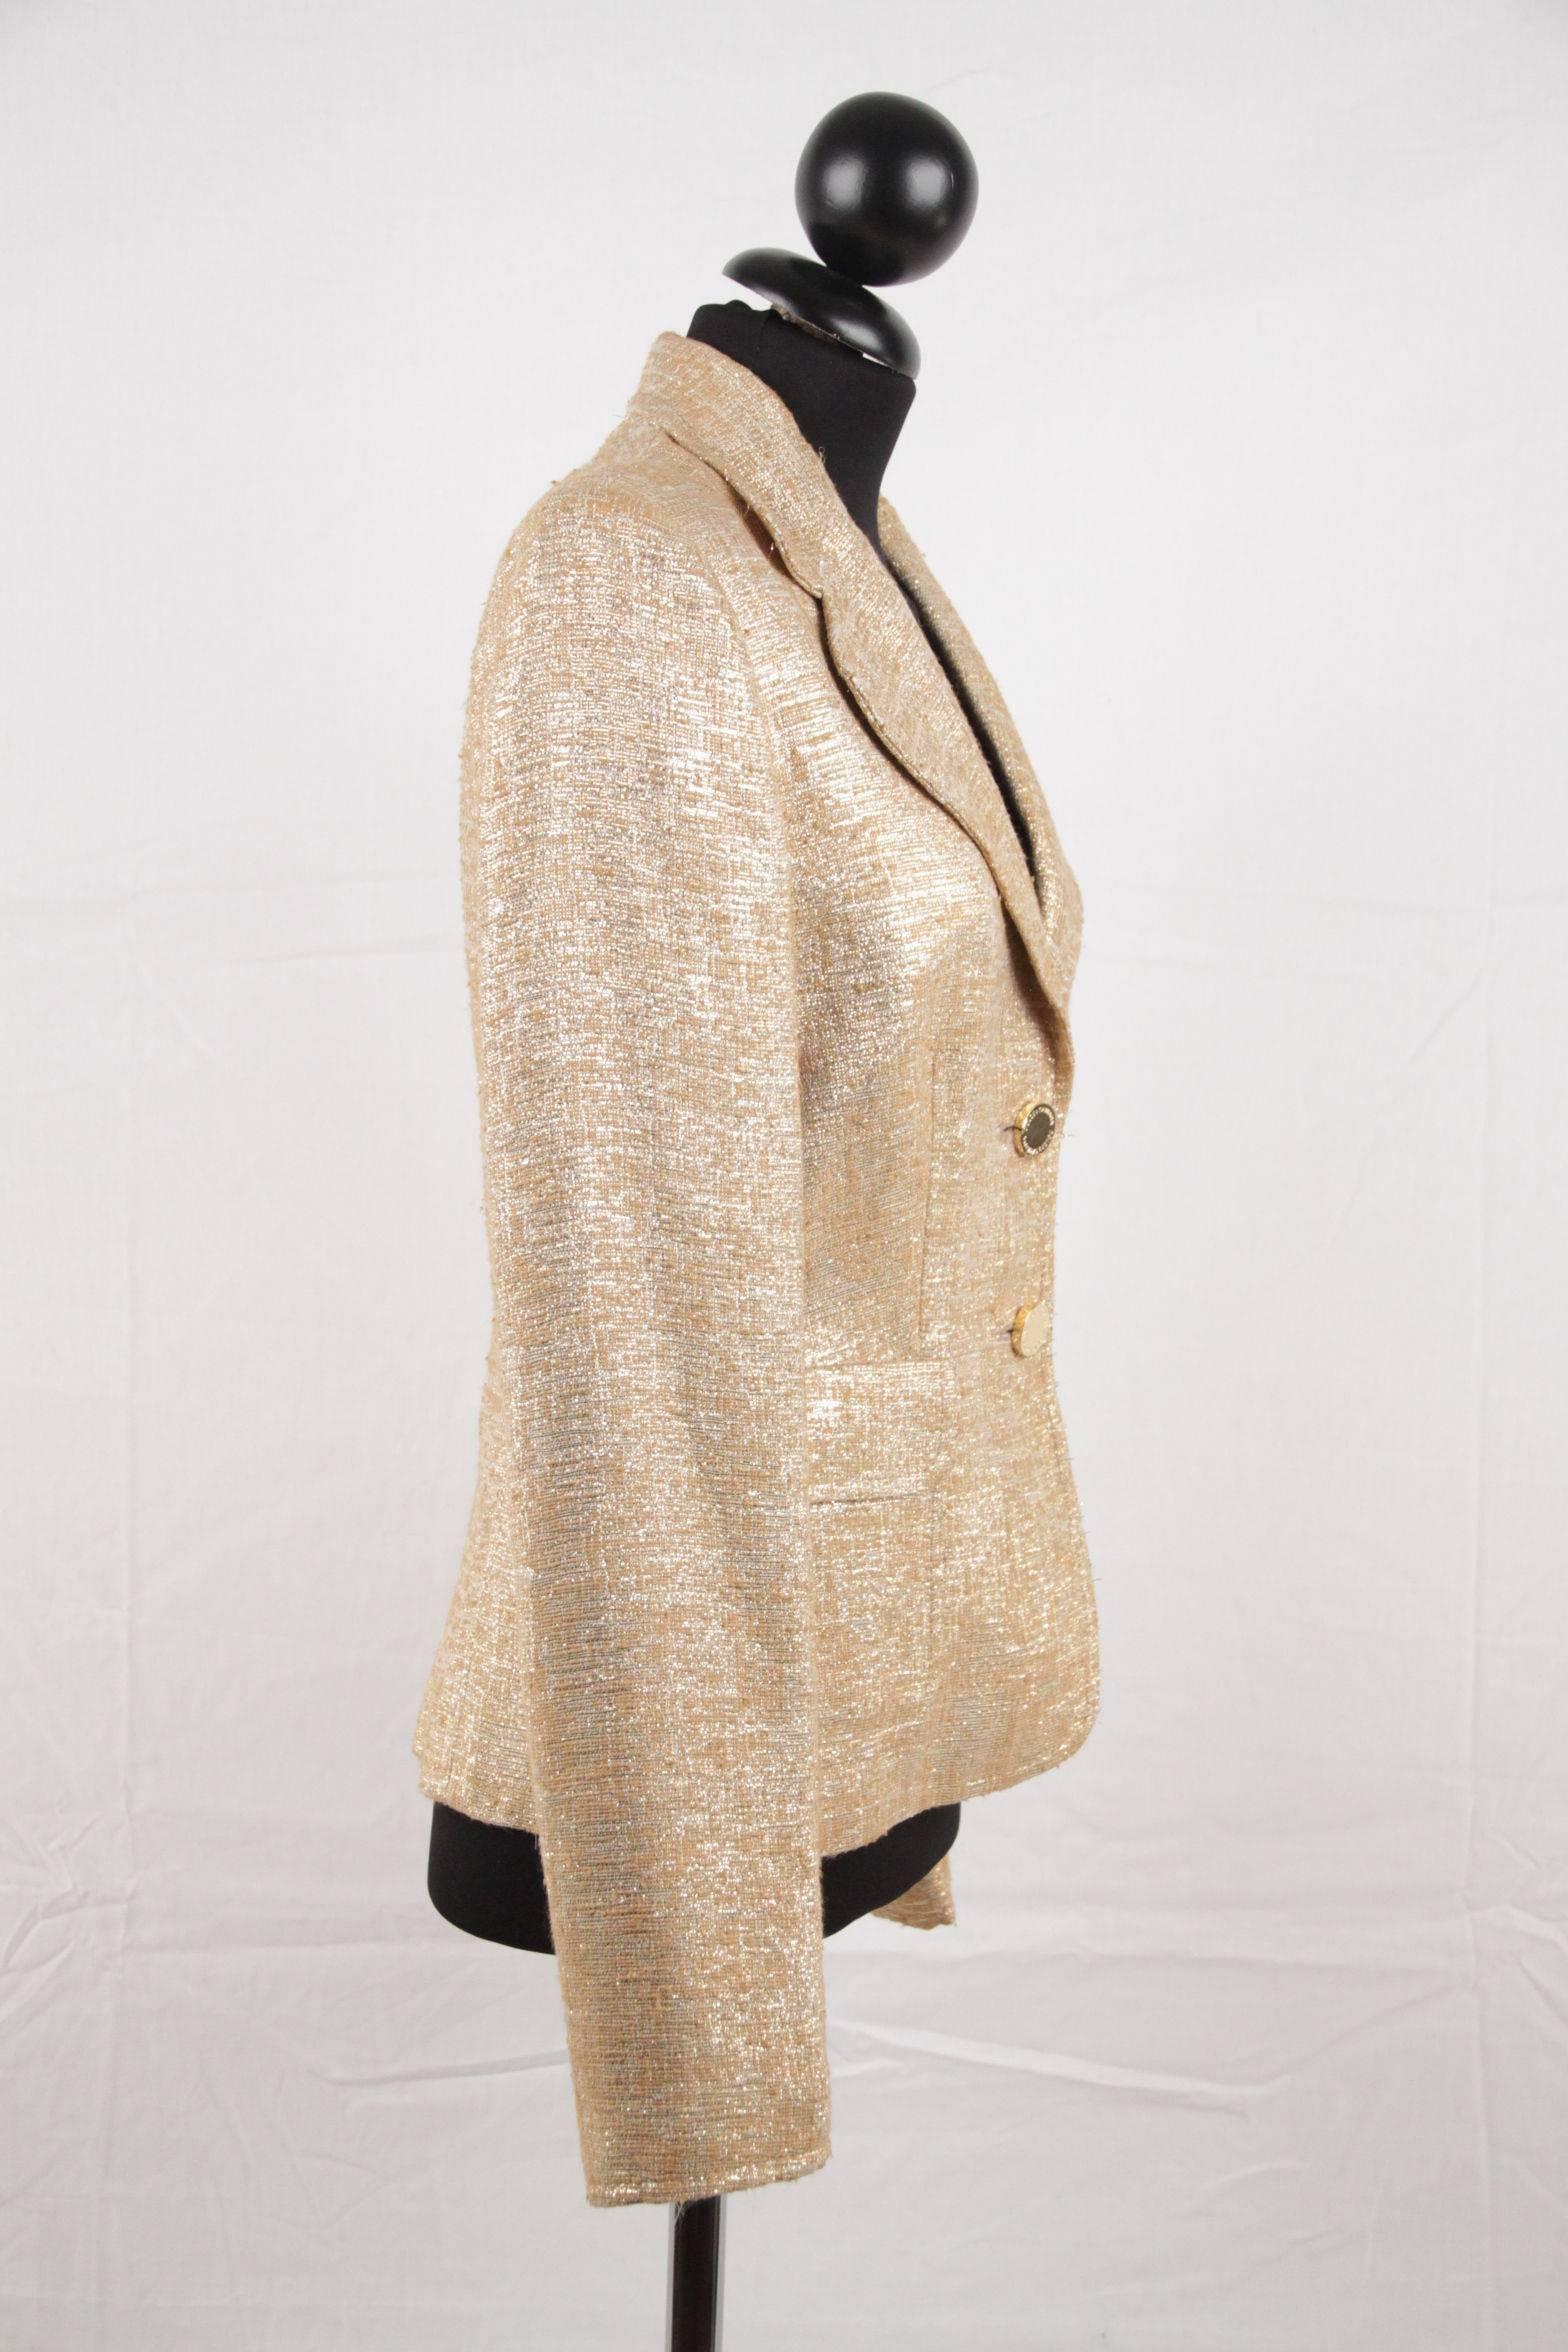 DOLCE & GABBANA Gold Tone METALLIC Woven Fabric BLAZER Jacket SIZE 42 2